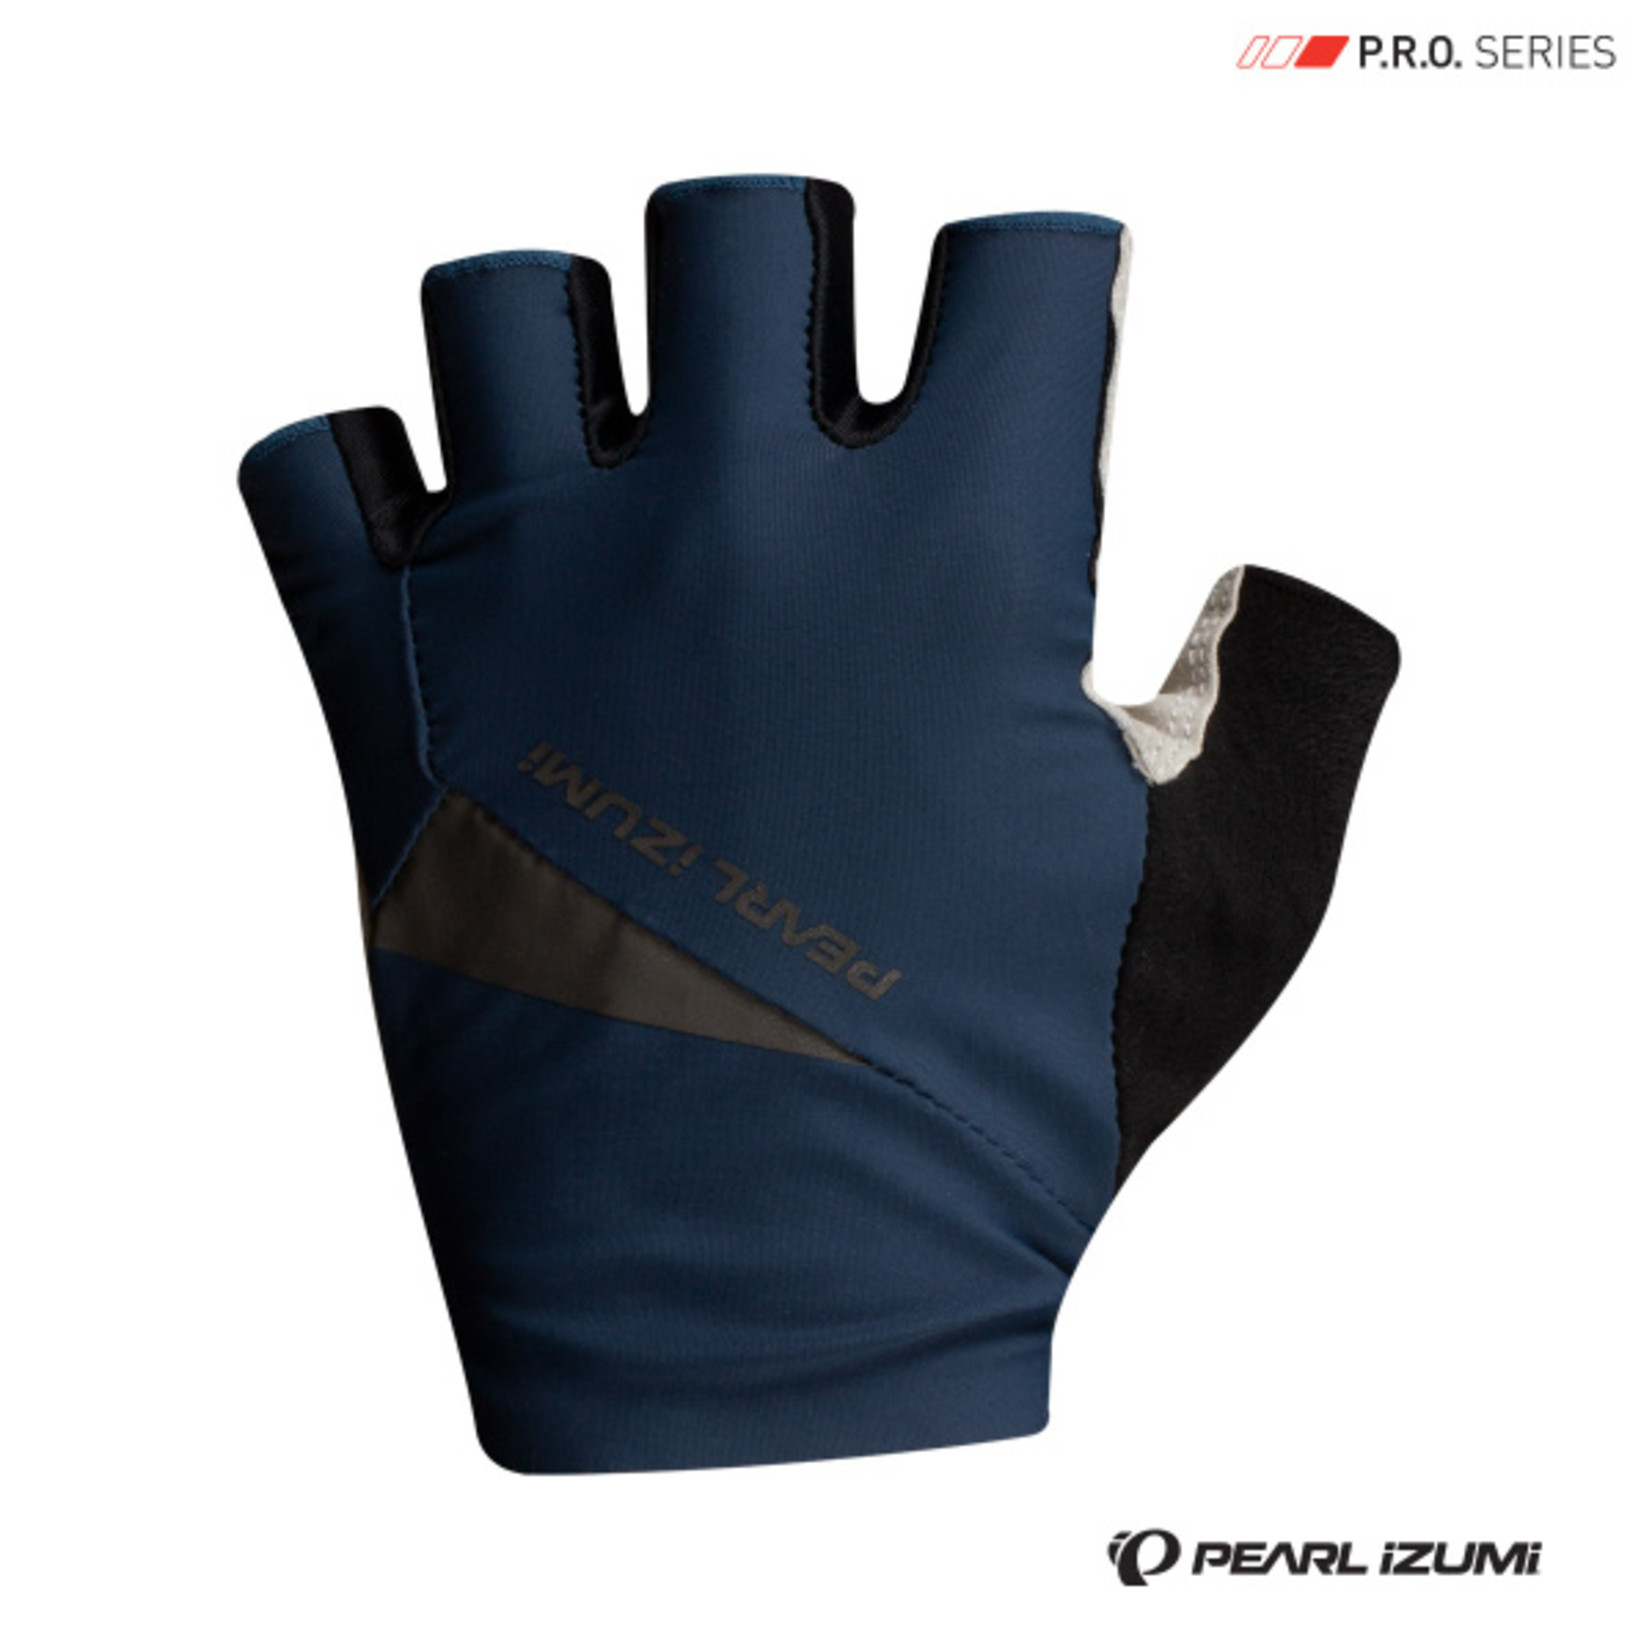 Pearl Izumi Pearl Izumi Pro Gel Fingerless Bike Gloves